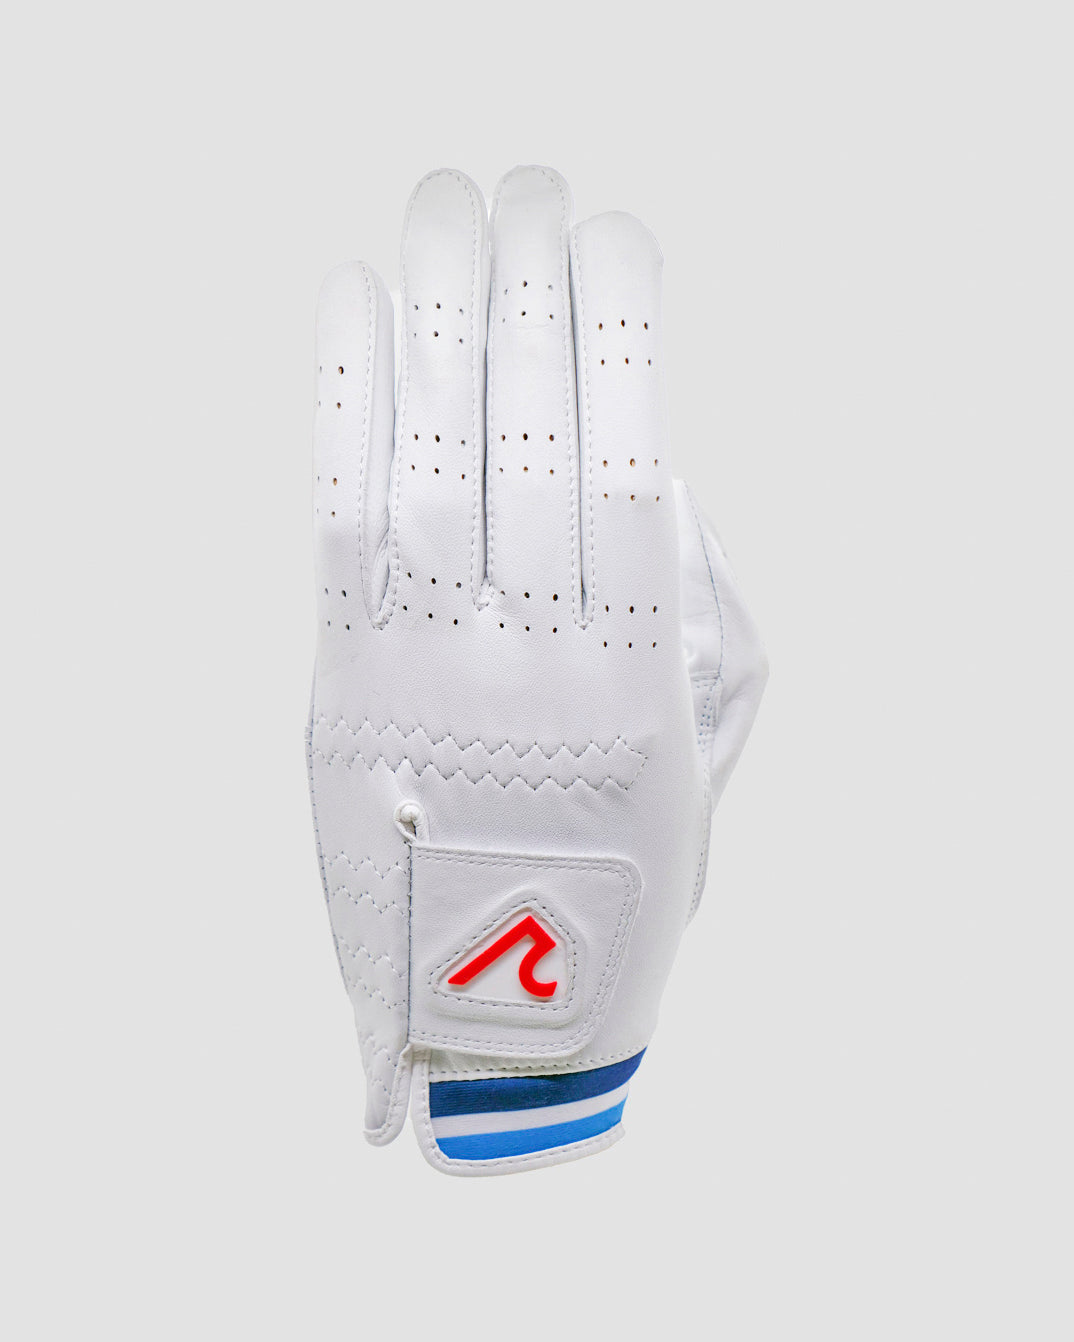 Galvin Glove in White/Multi